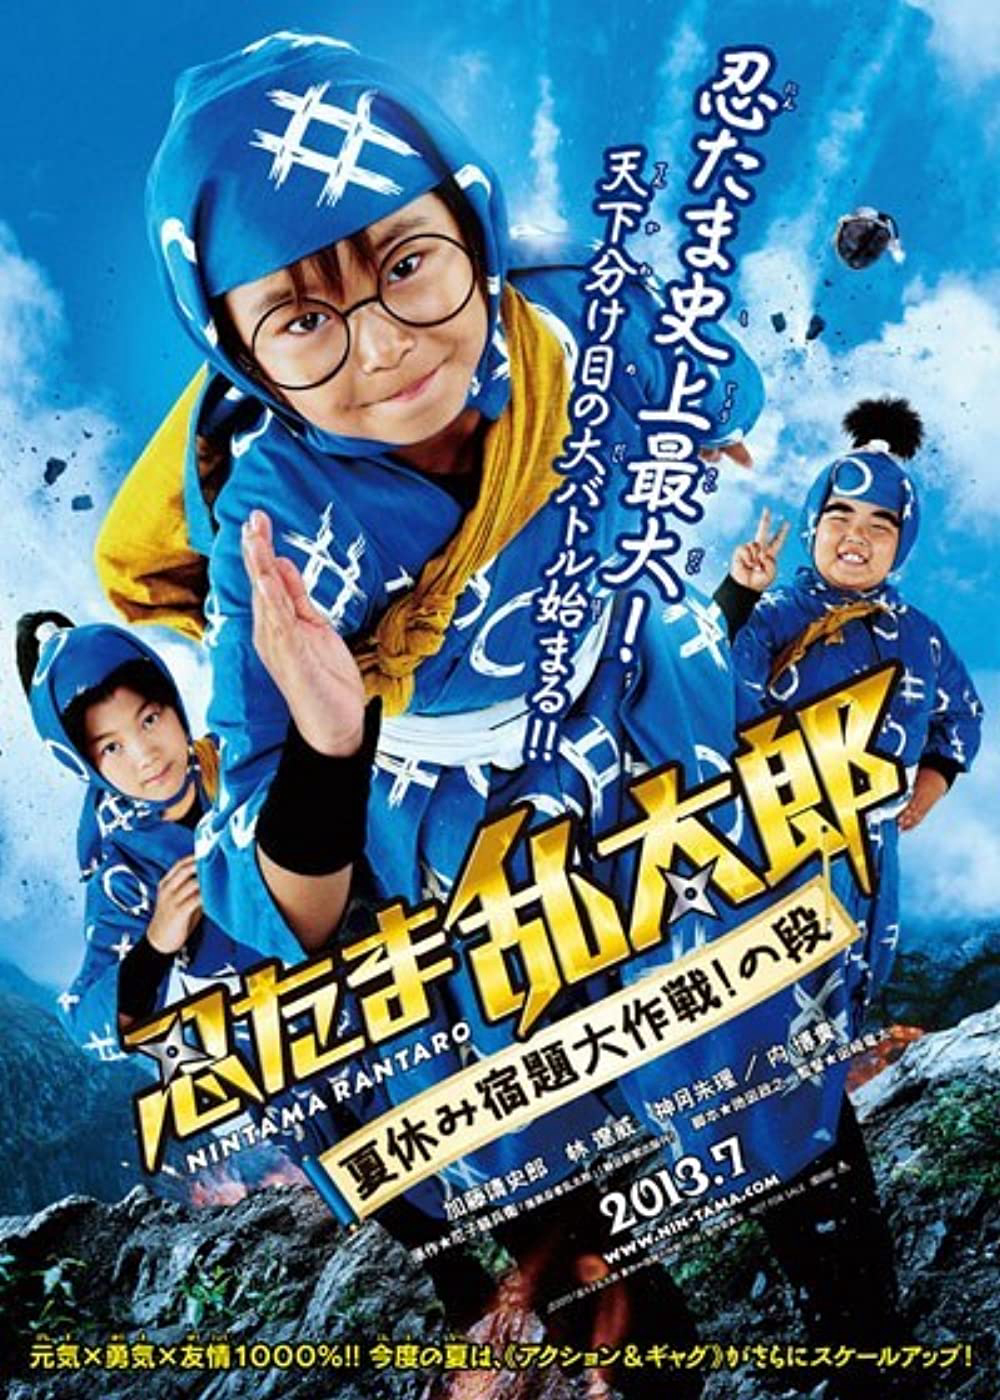 Poster Phim Ninja Loạn Thị: Điệp Vụ Bất Khả Thi (Ninja Kids!!!: Summer Mission Impossible)